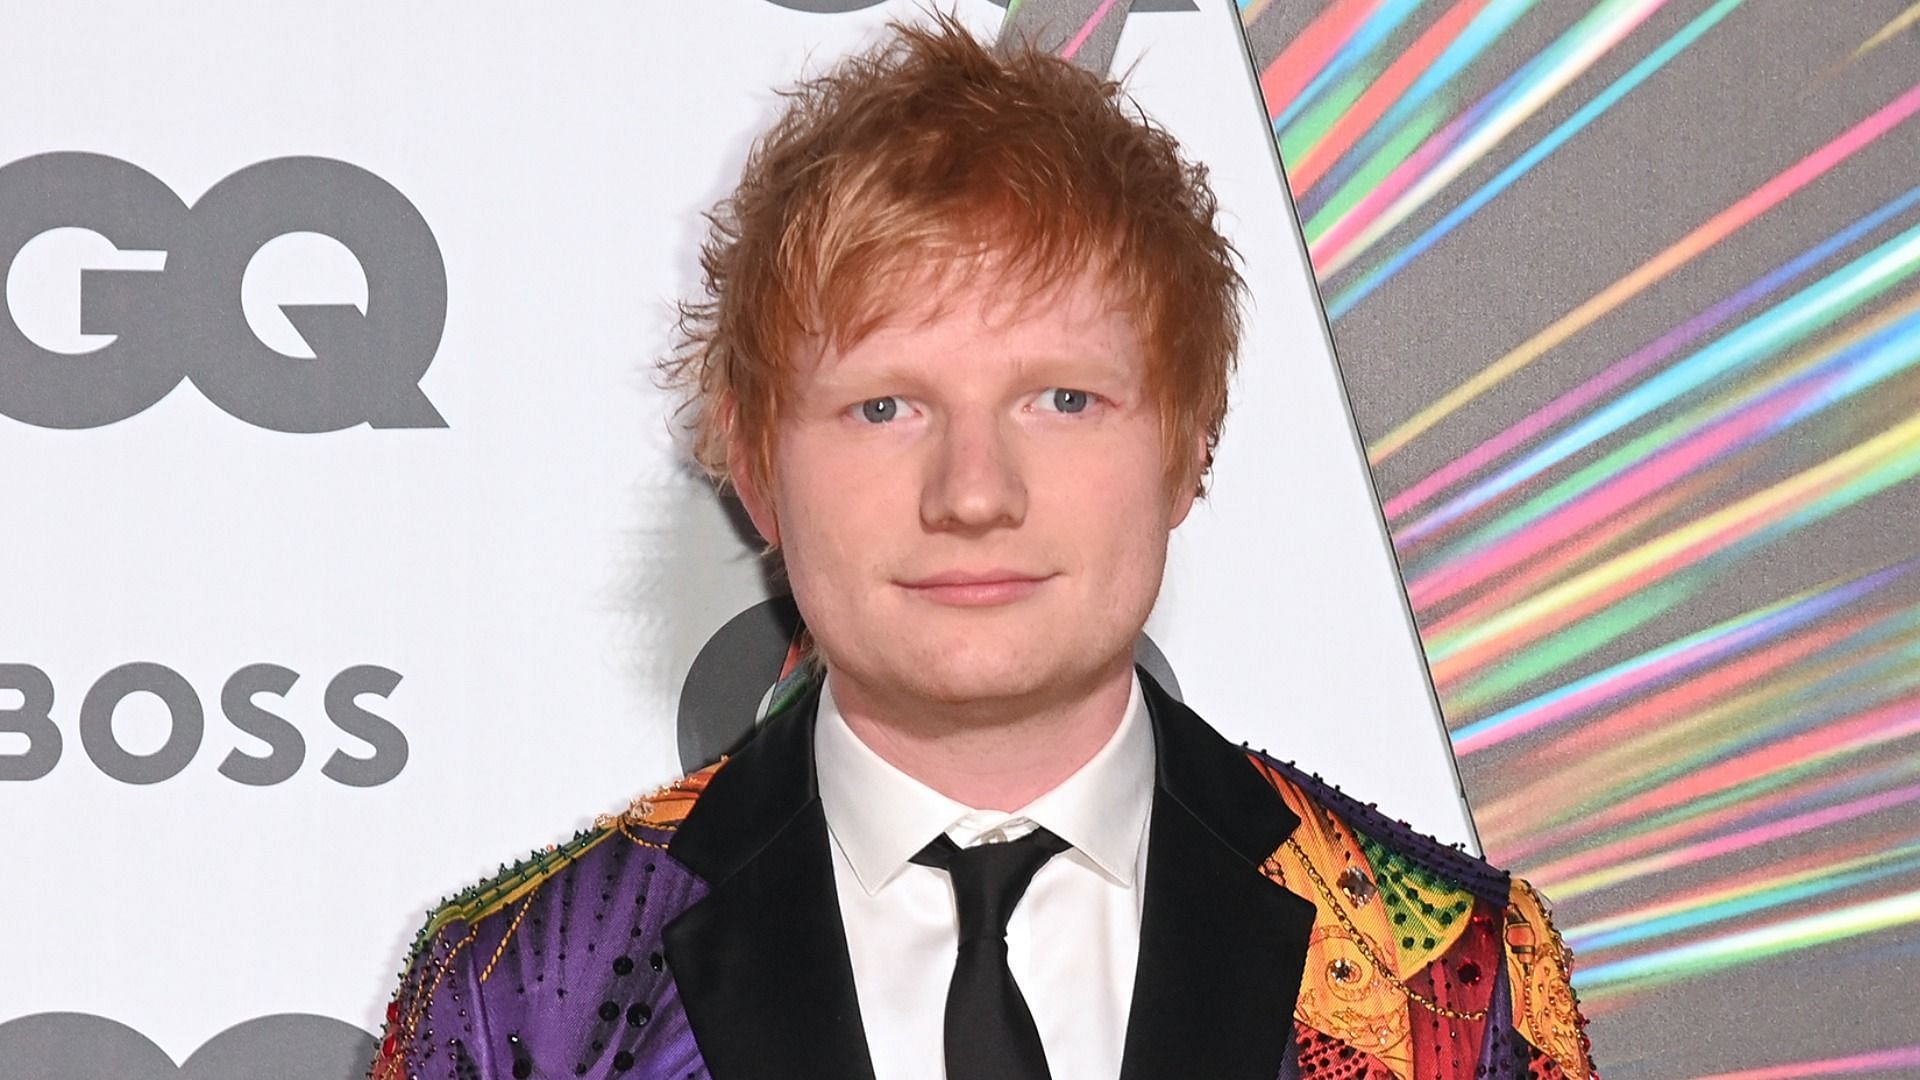 Ed Sheeran (Image via Getty Images)